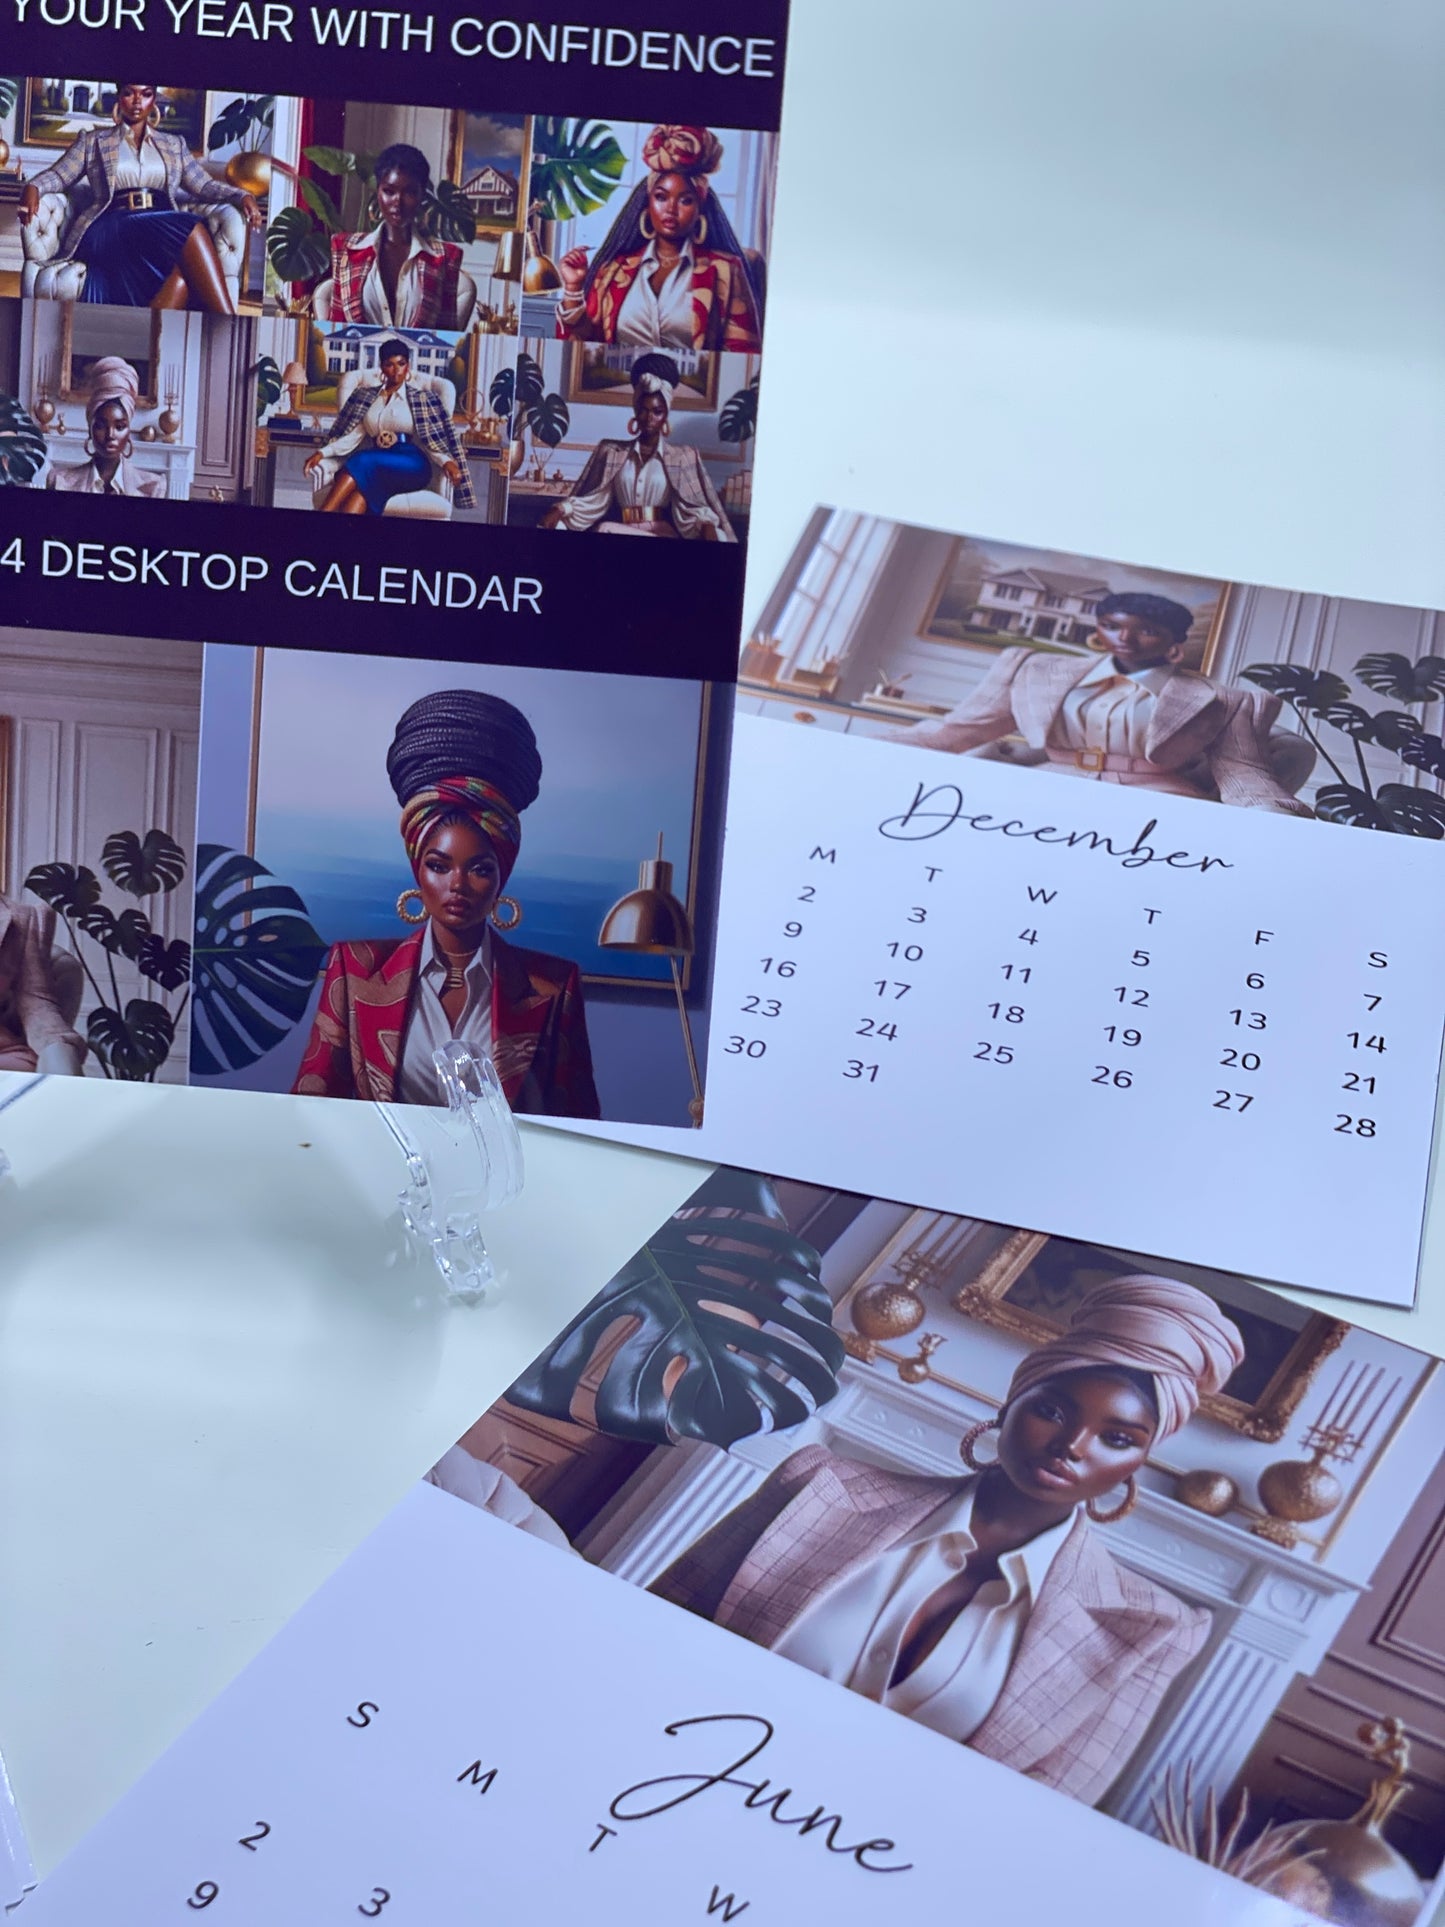 2024 Desktop Calendar Set Conquer Your Year With Confidence